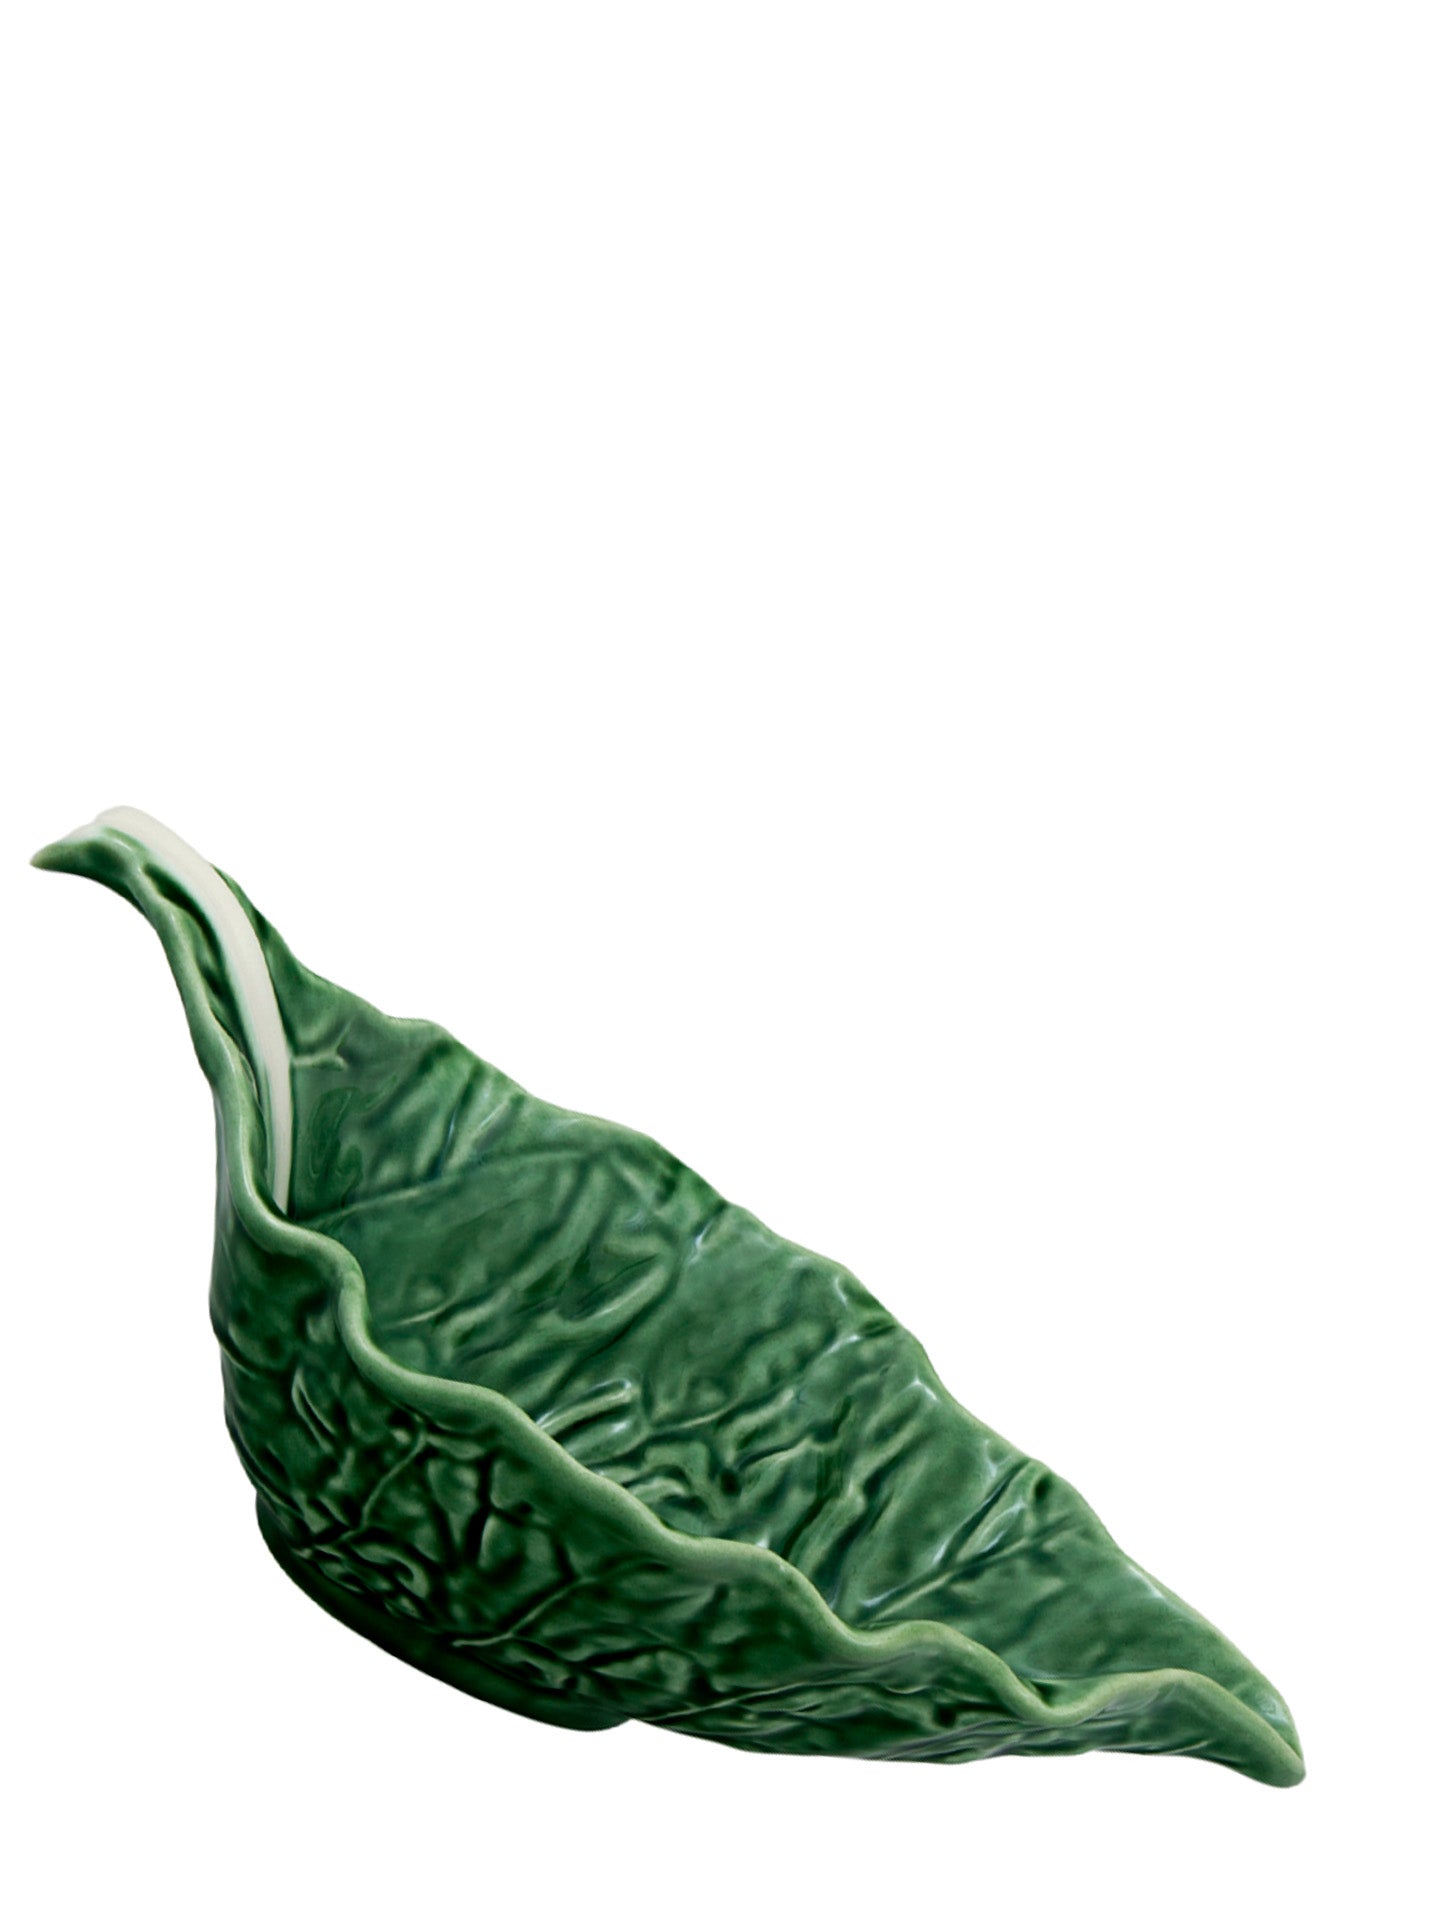 Sauce Pitcher Cabbage, Green